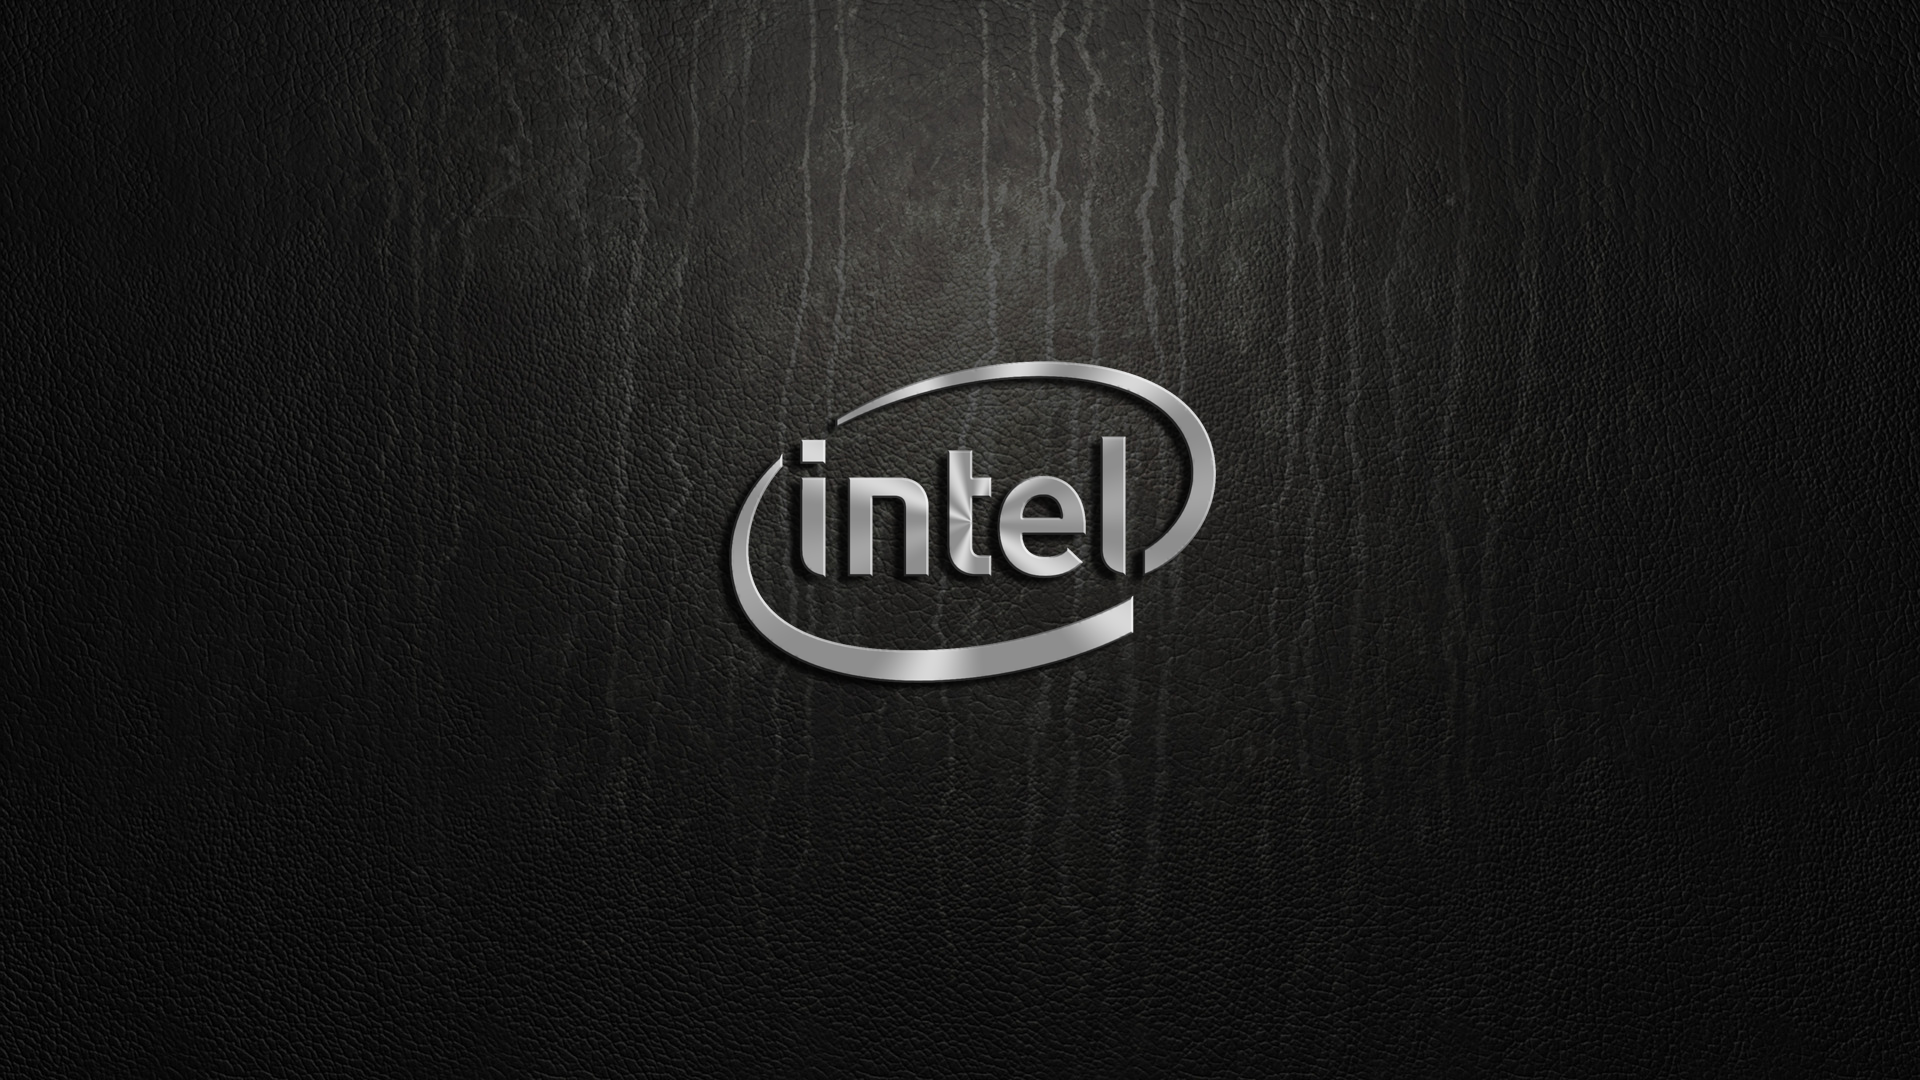 Intel Microchip Wallpaper